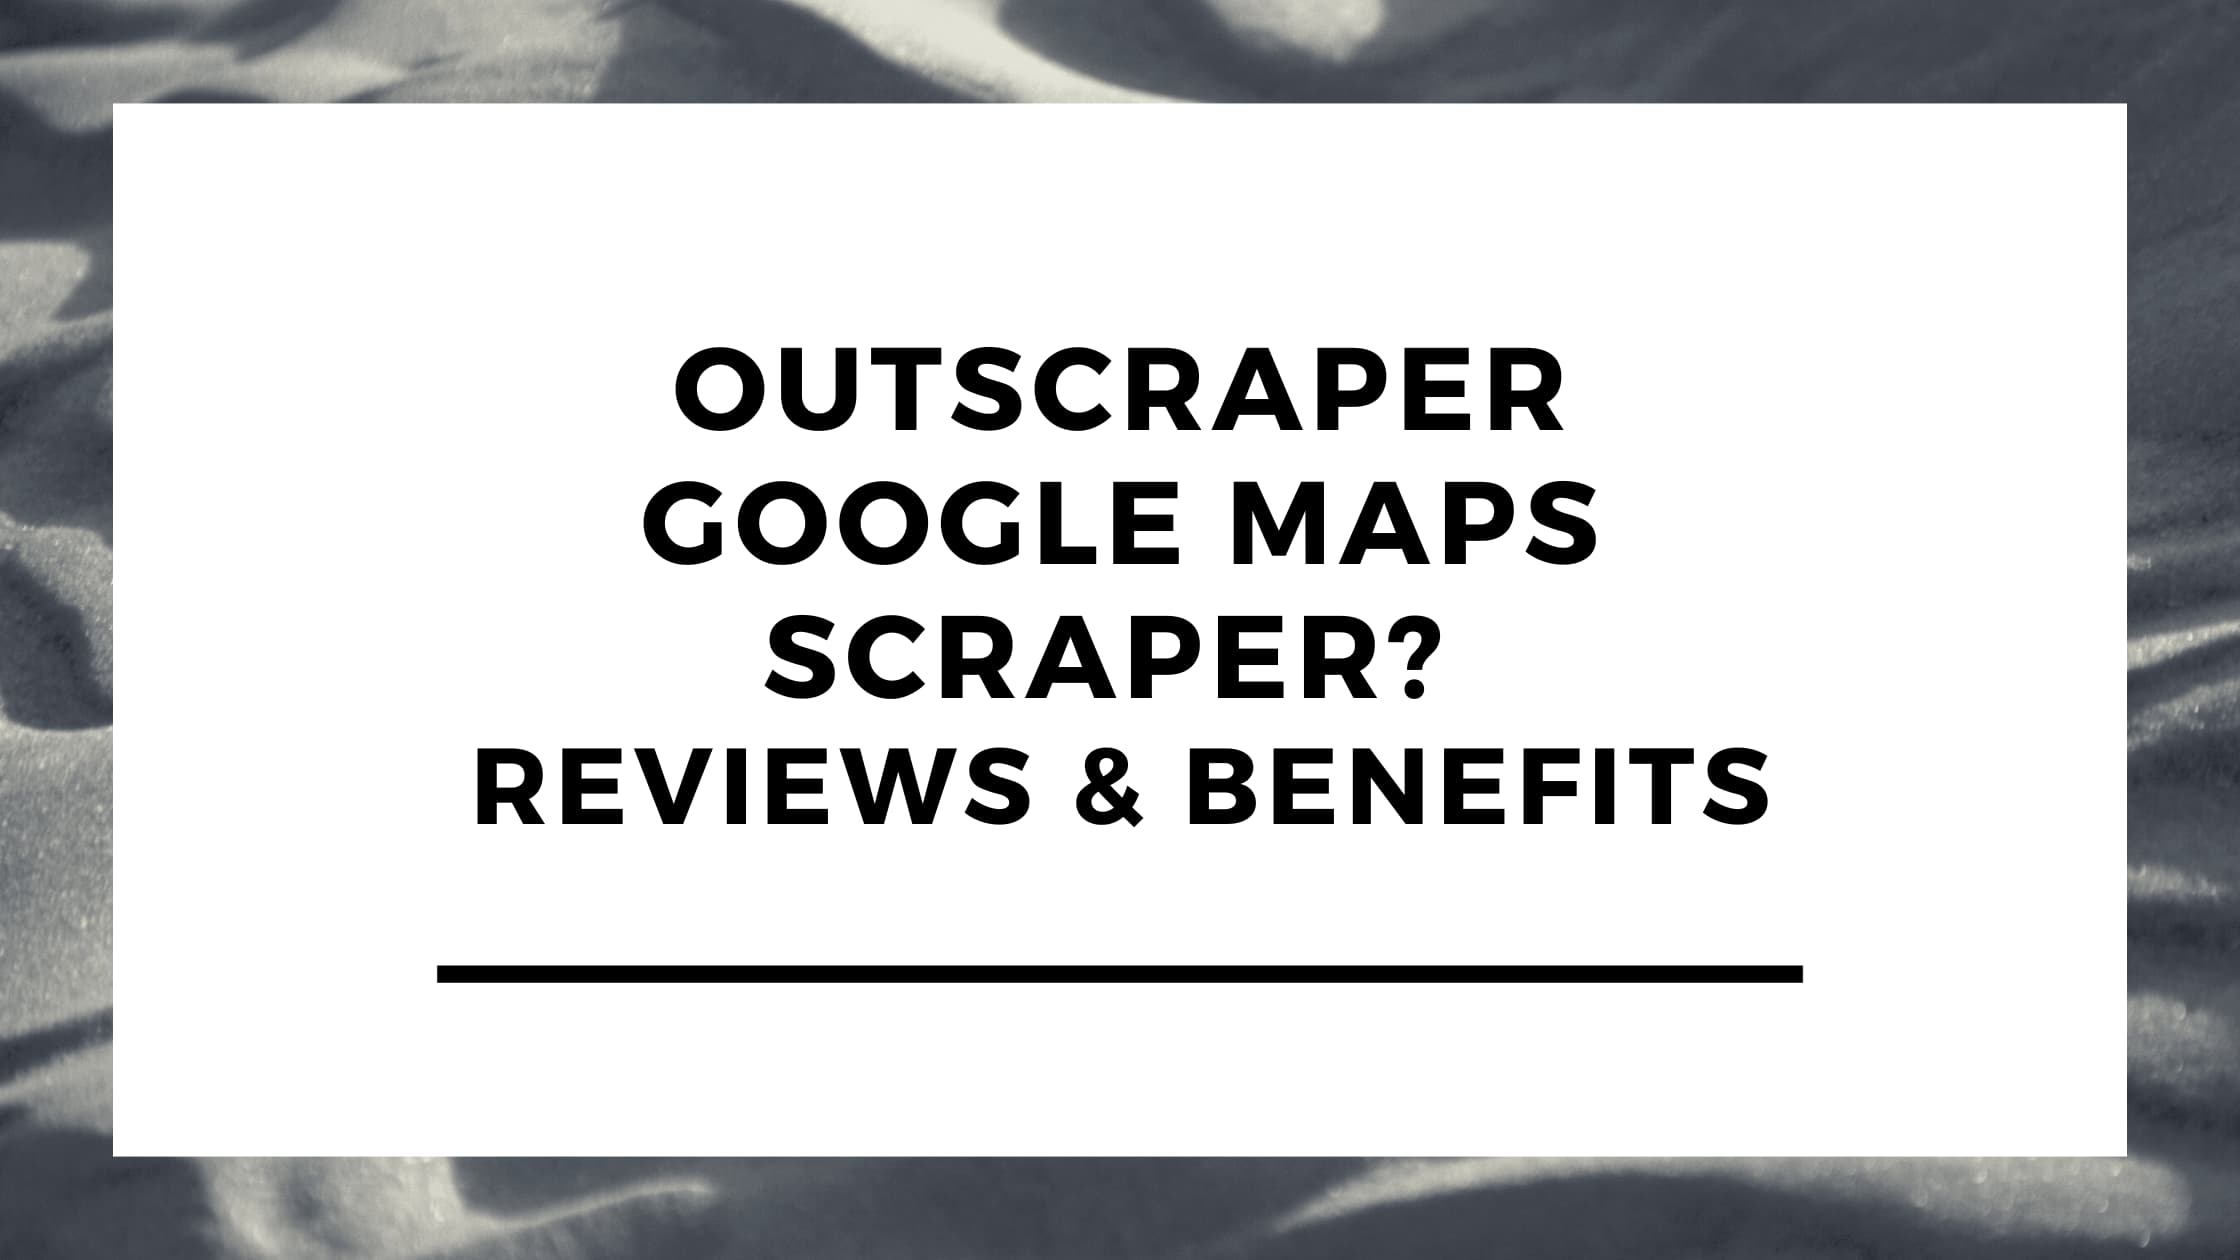 Why Use Outscraper Google Maps Scraper? Reviews & Benefits